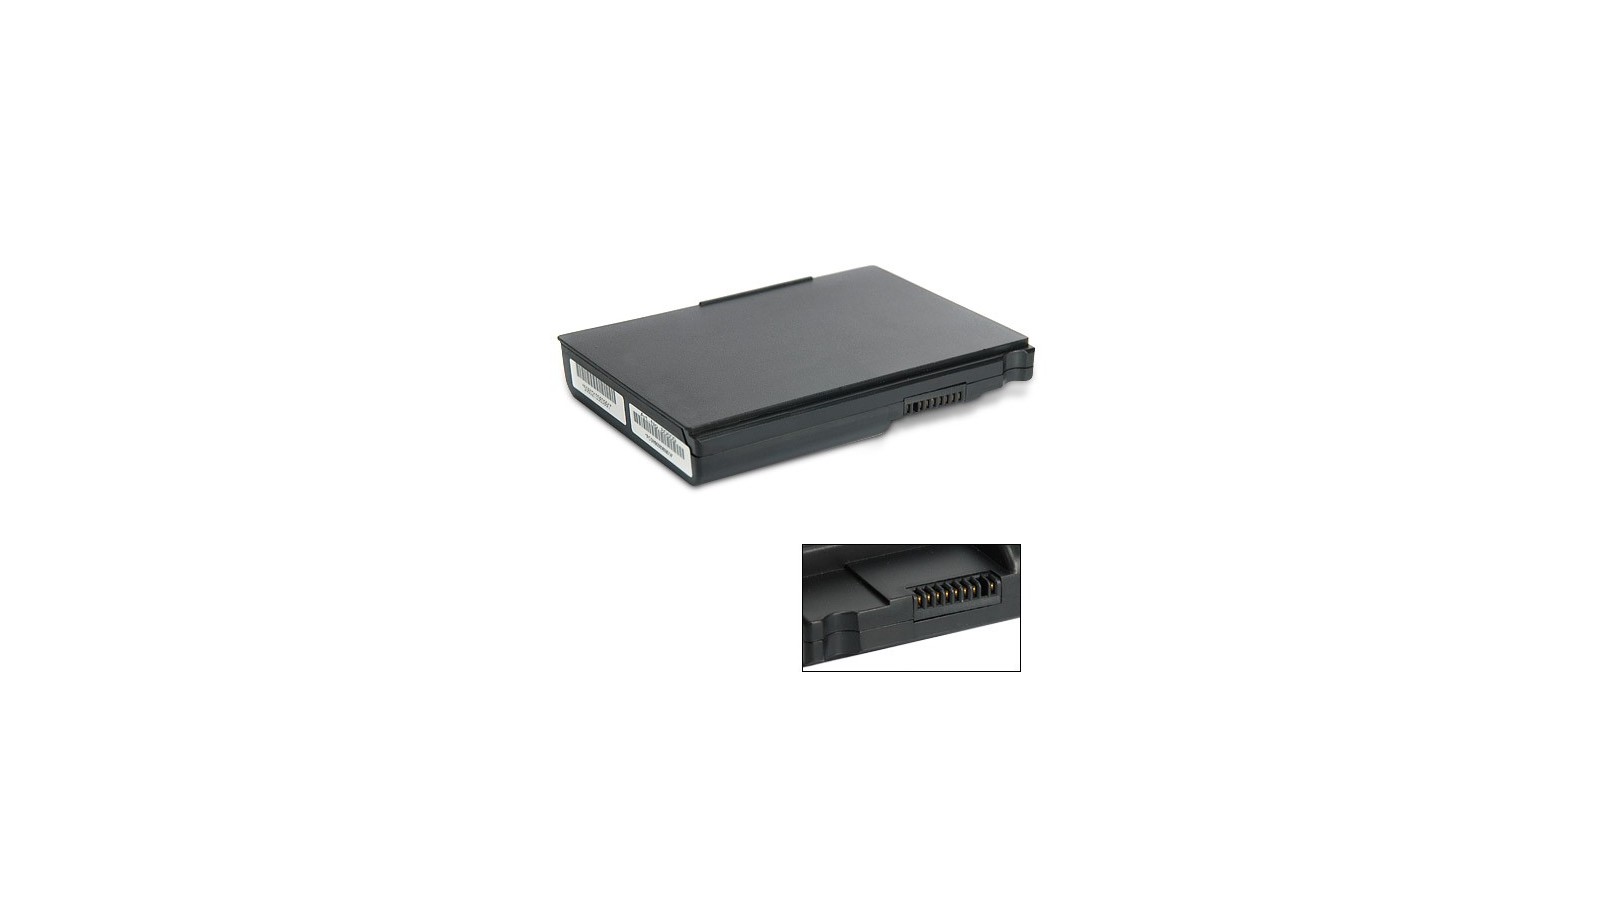 Batteria 8 celle BTP-550 compatibile con Acer Aspire 1200 TravelMate 270 272 273 275 530 TravelMate Alpha 550 Serie